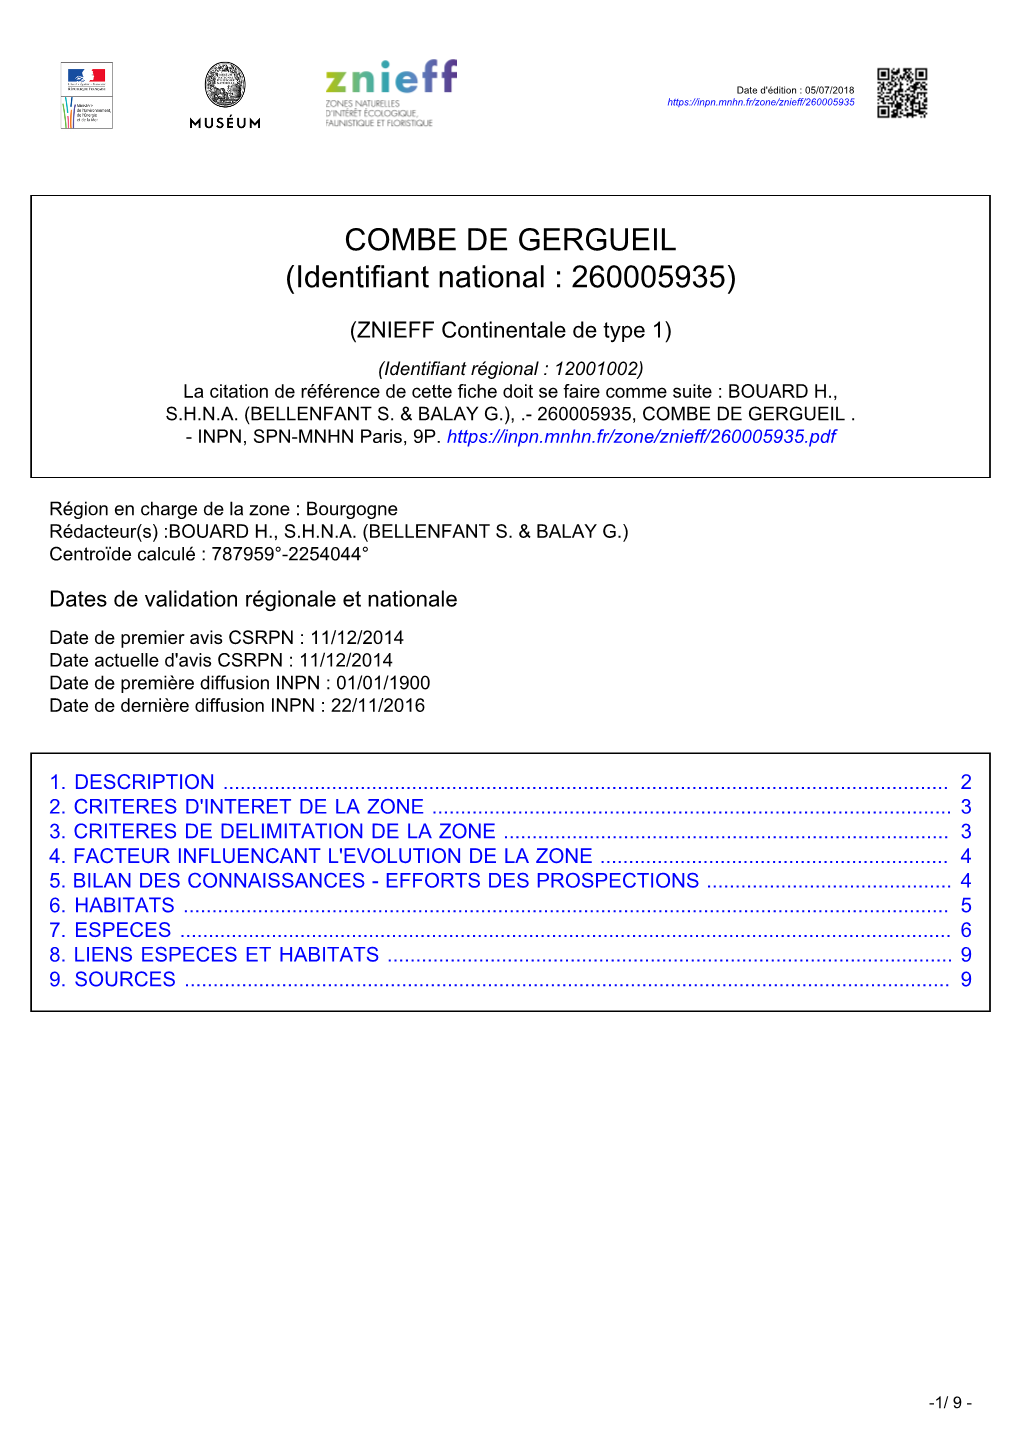 COMBE DE GERGUEIL (Identifiant National : 260005935)